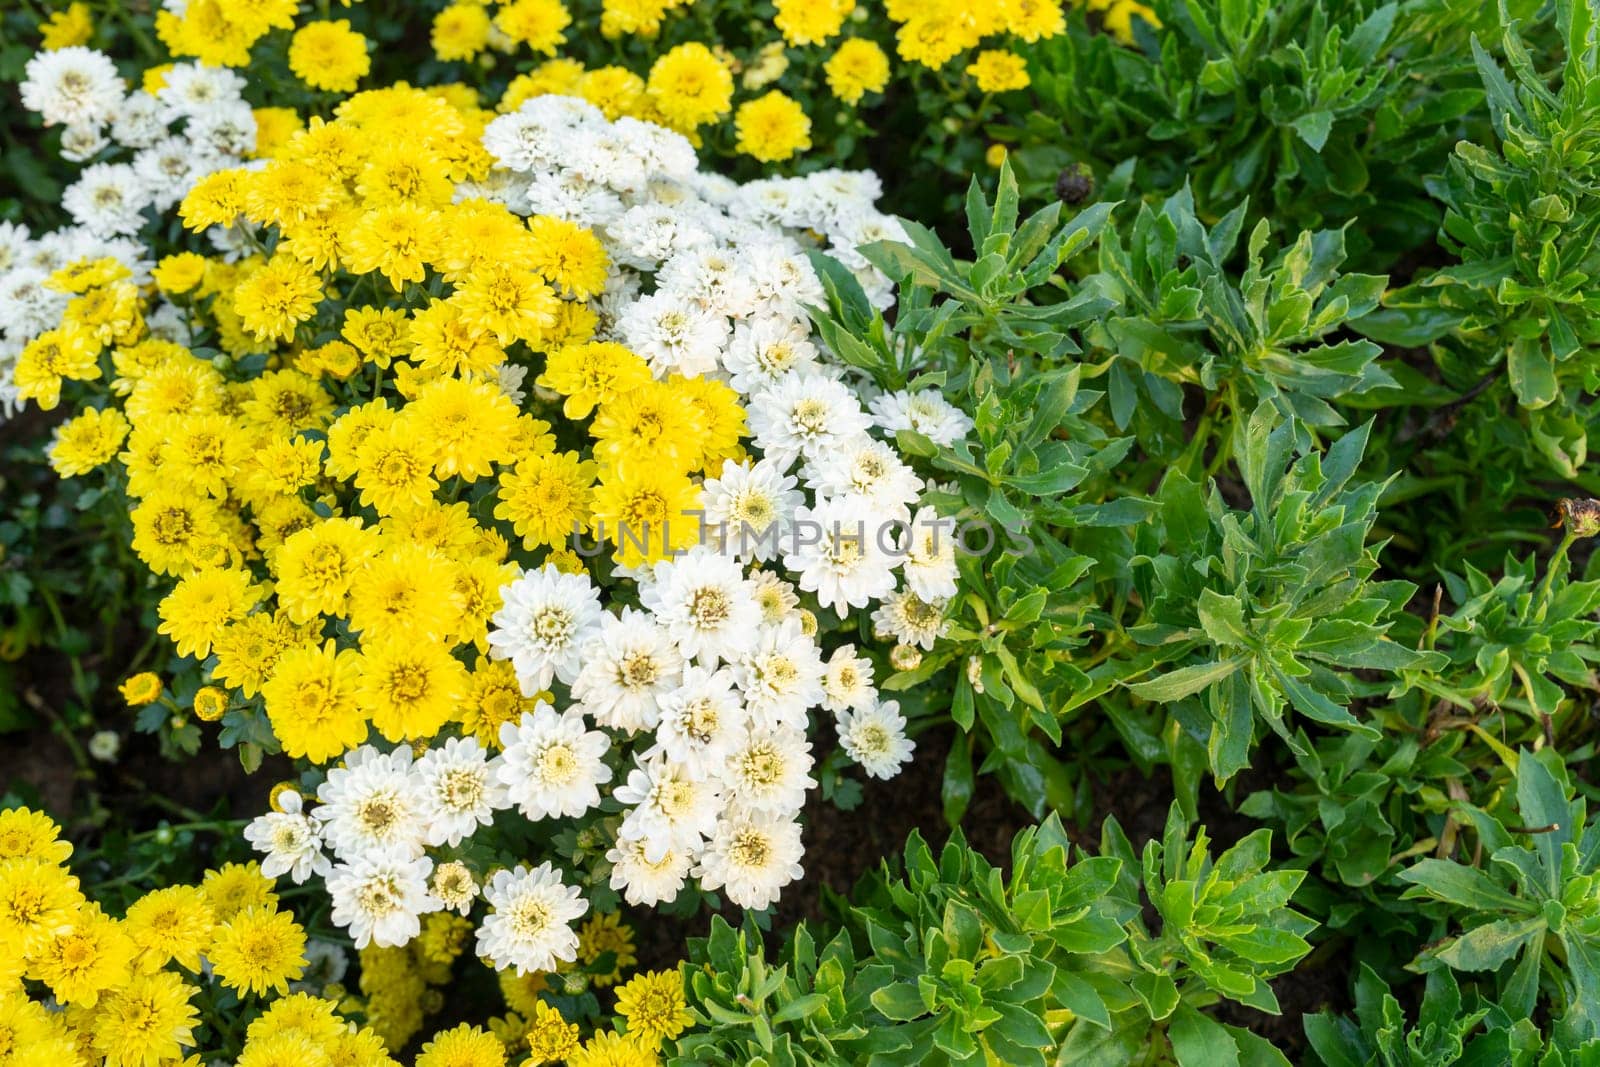 The Soft Yellow Chrysanthemum flowers in garden. by Gamjai